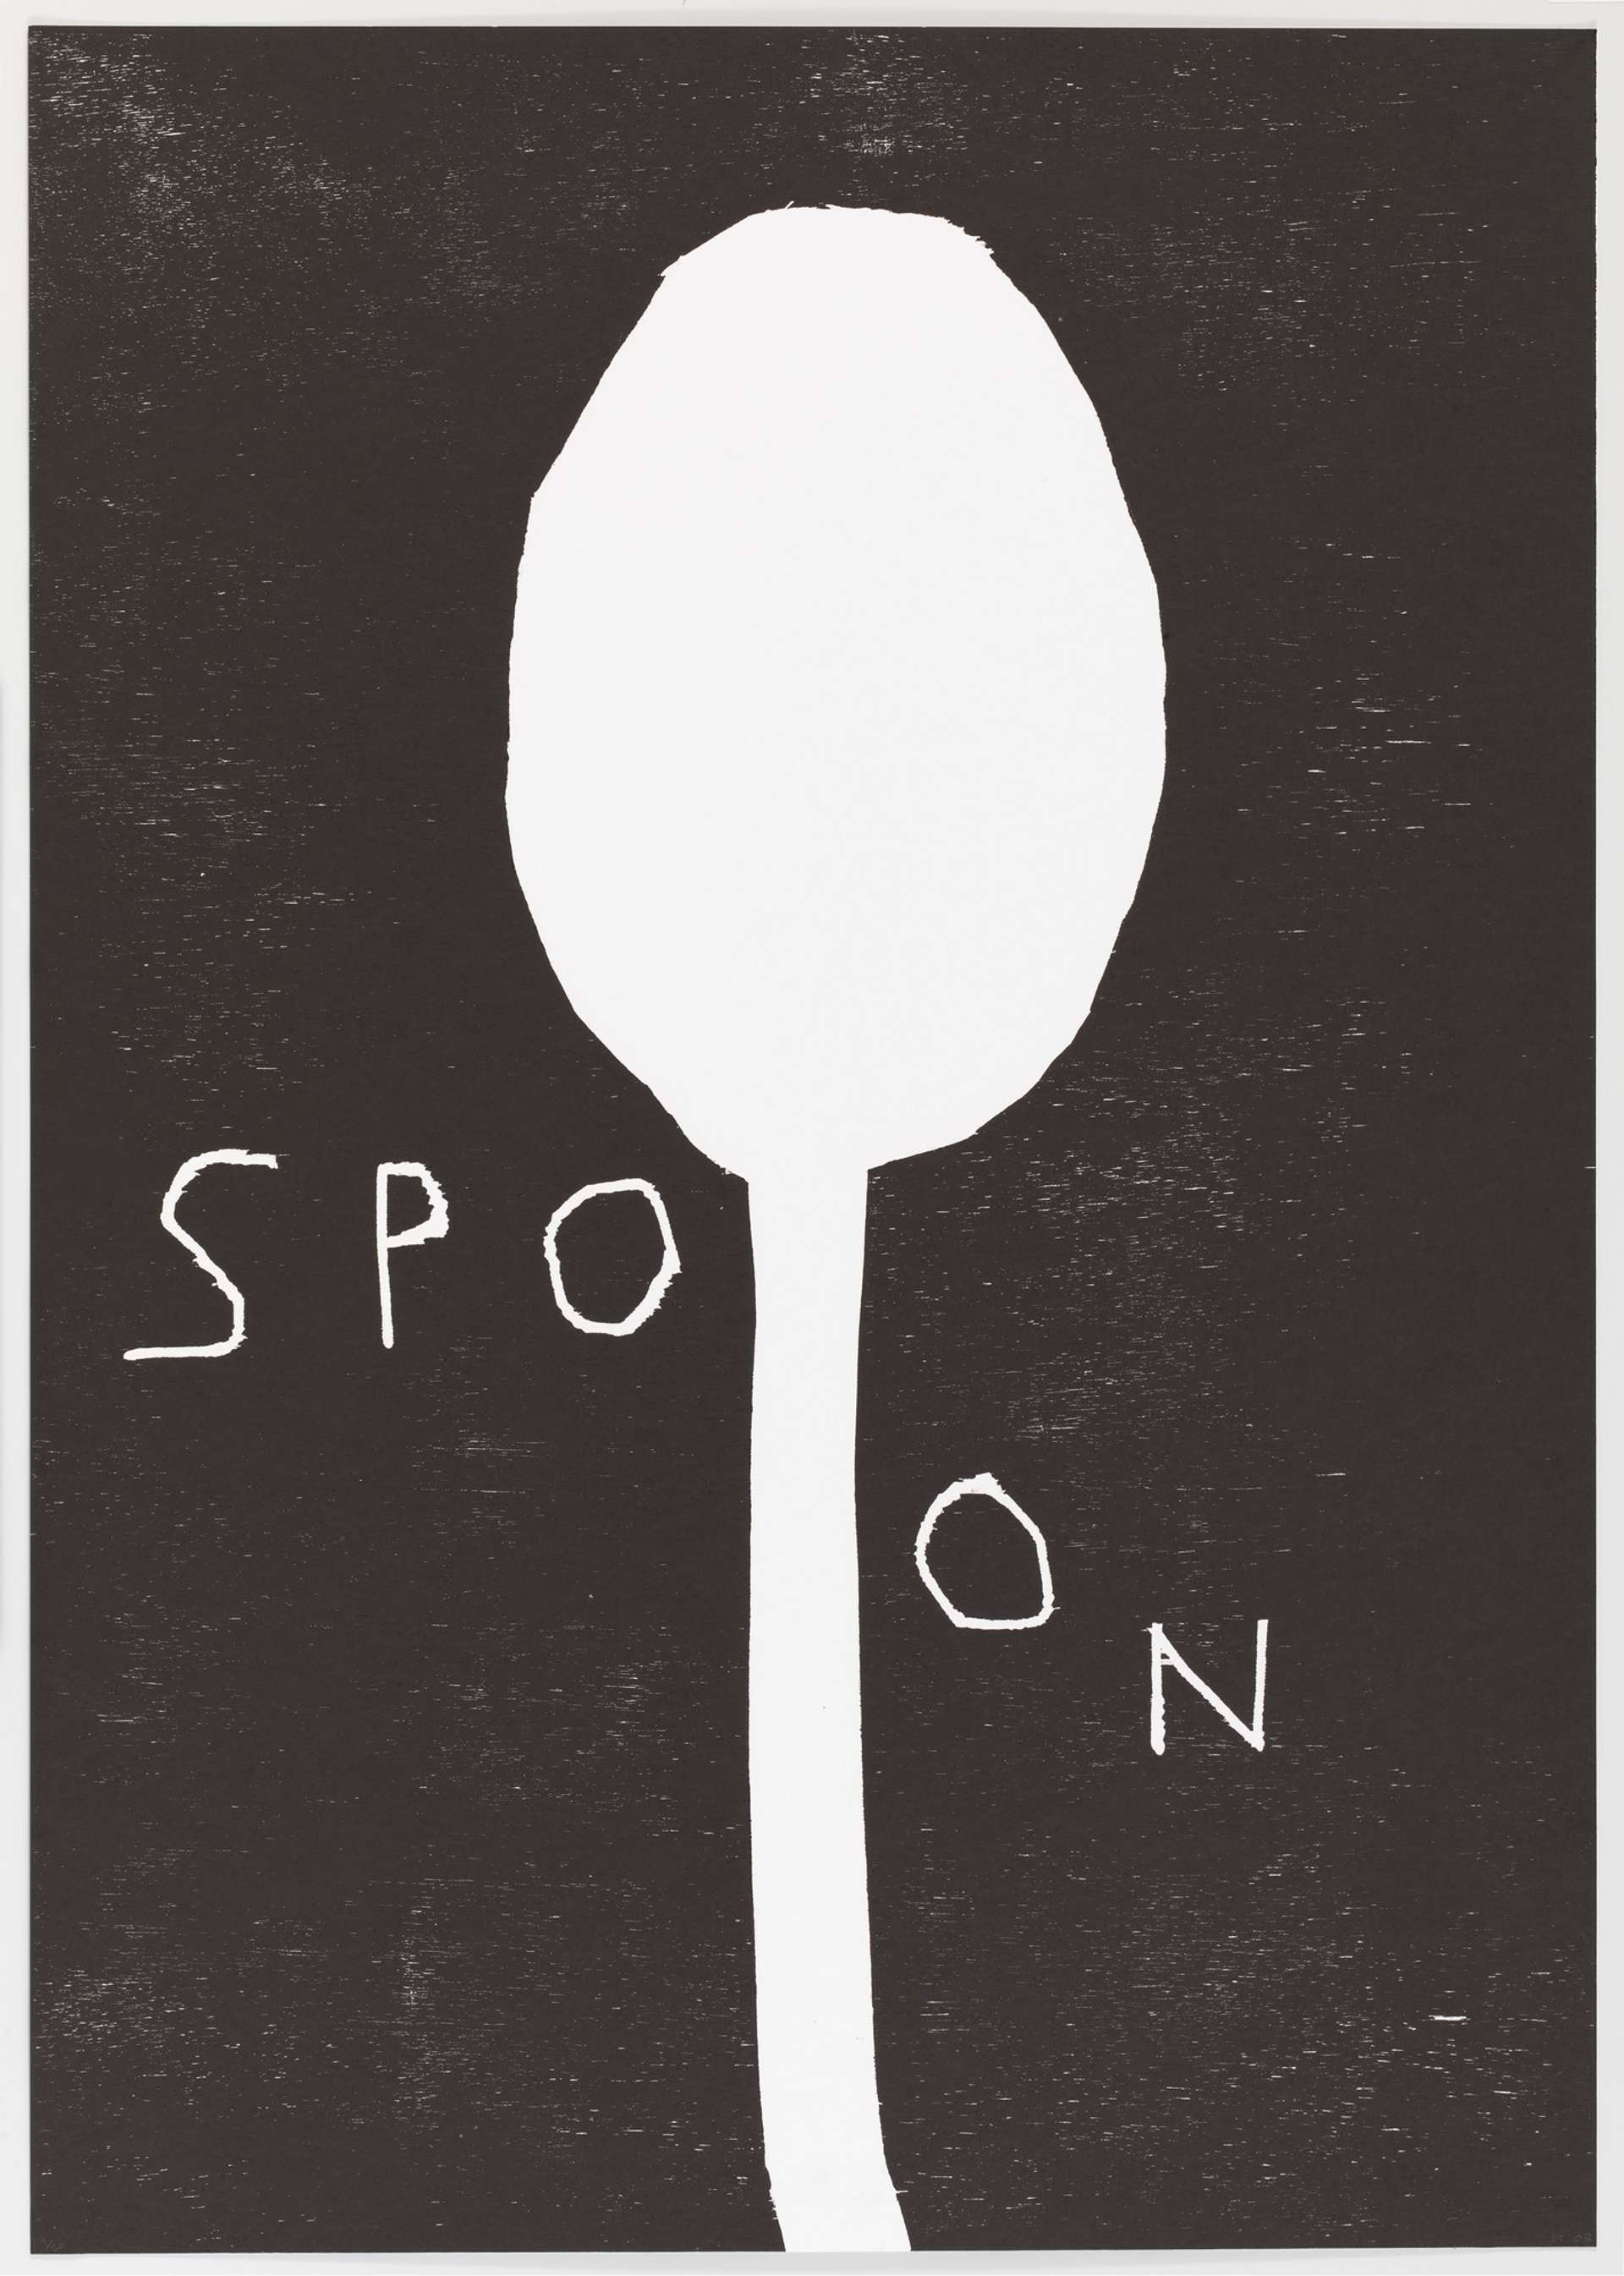 Untitled (Spoon) - Signed Print by David Shrigley 2008 - MyArtBroker